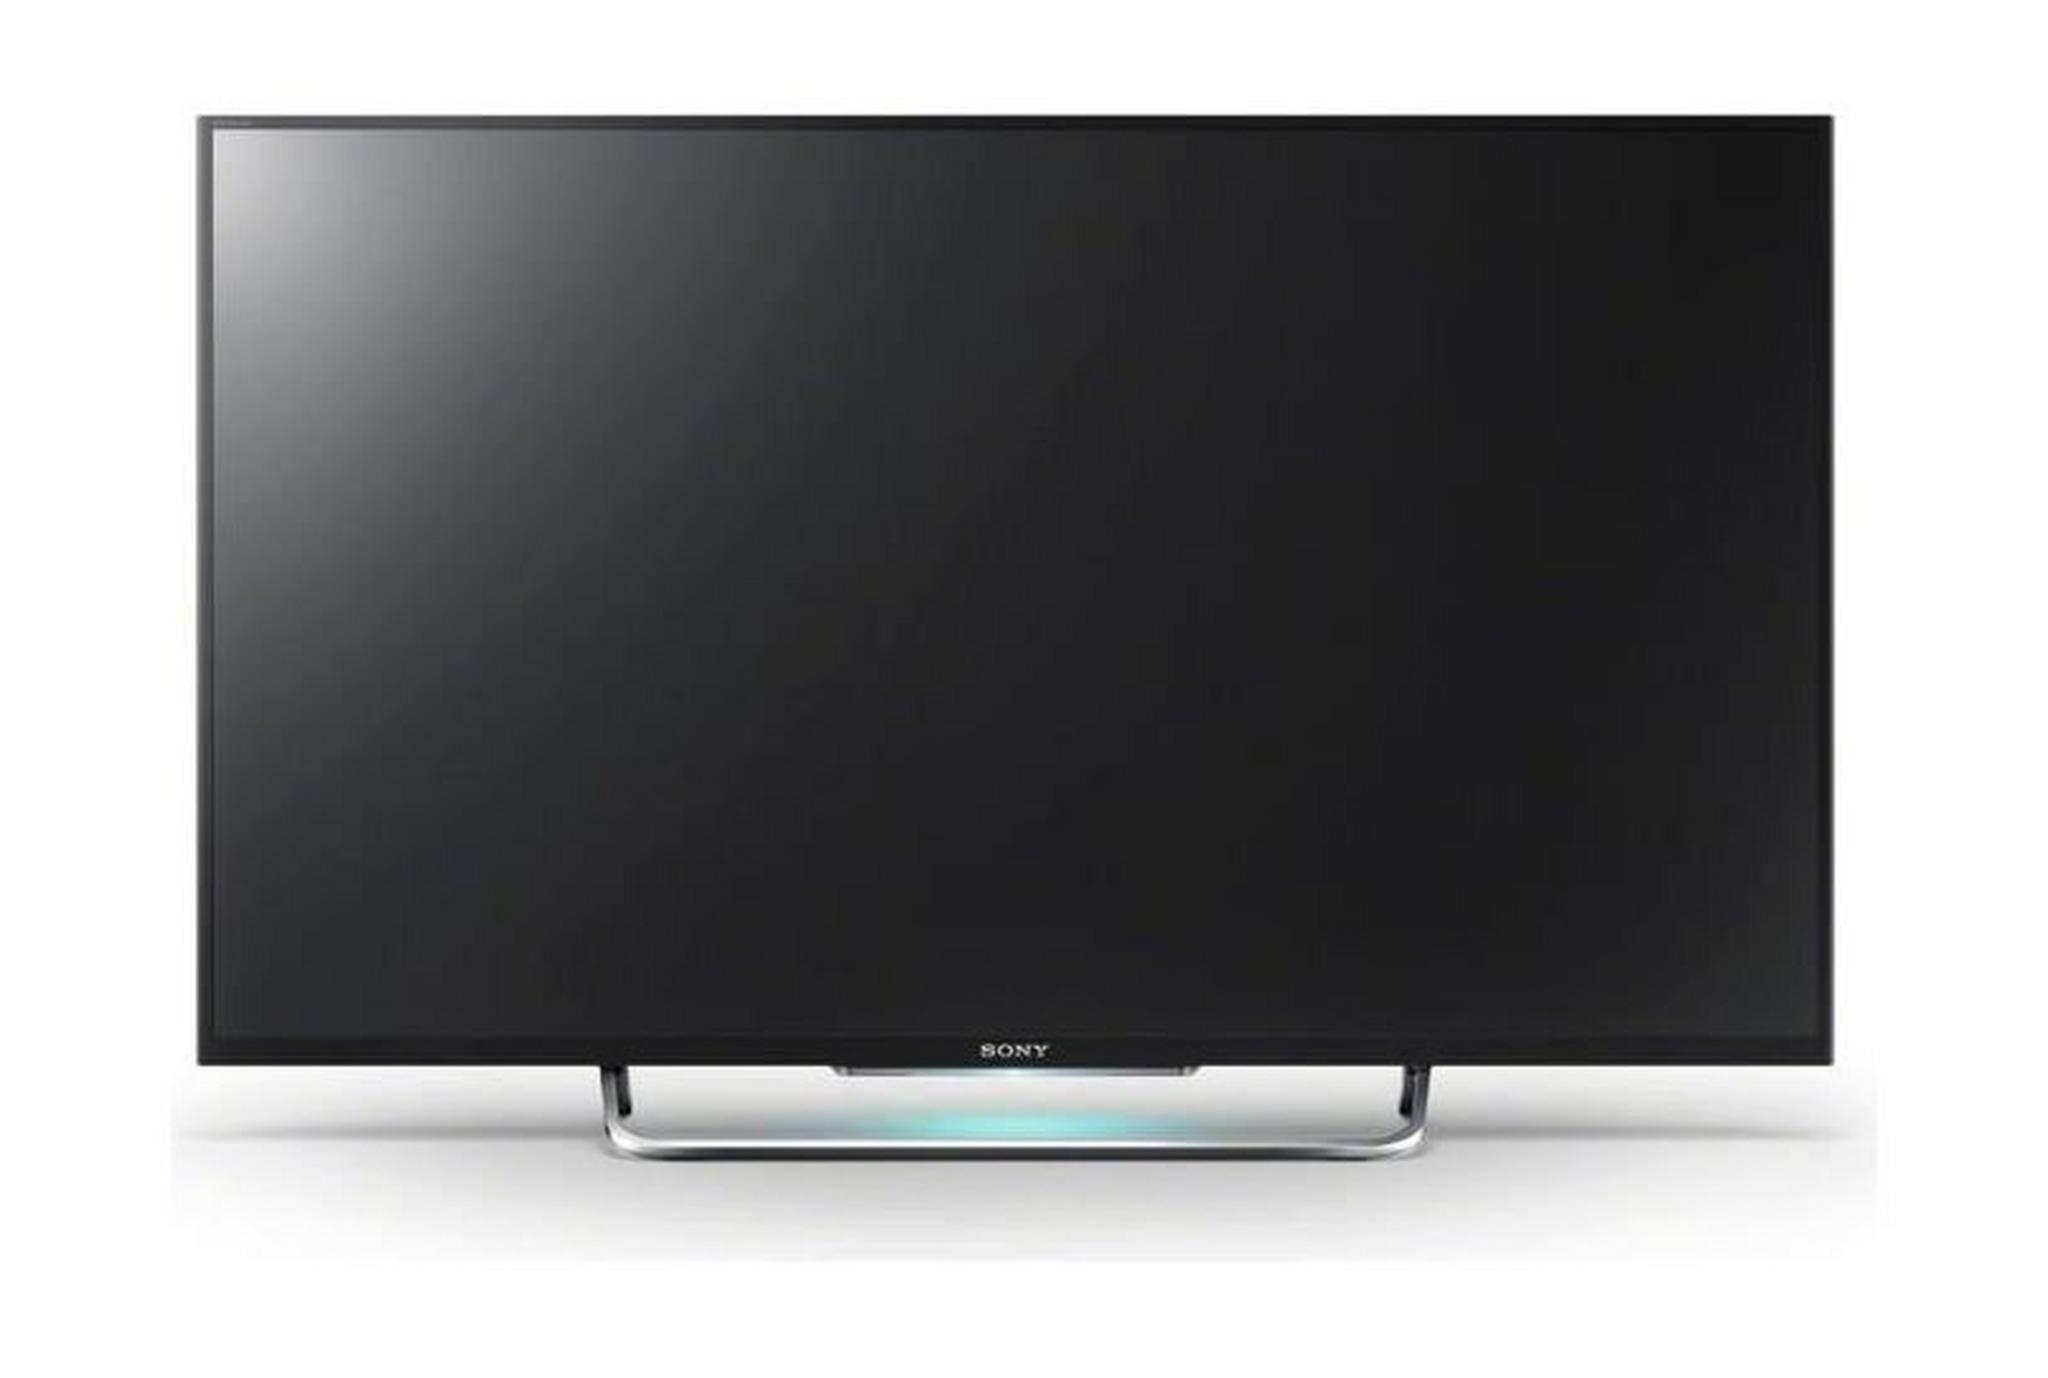 Sony Bravia 42-inch 3D Smart Full-HD LED TV - Black KDL-42W800B